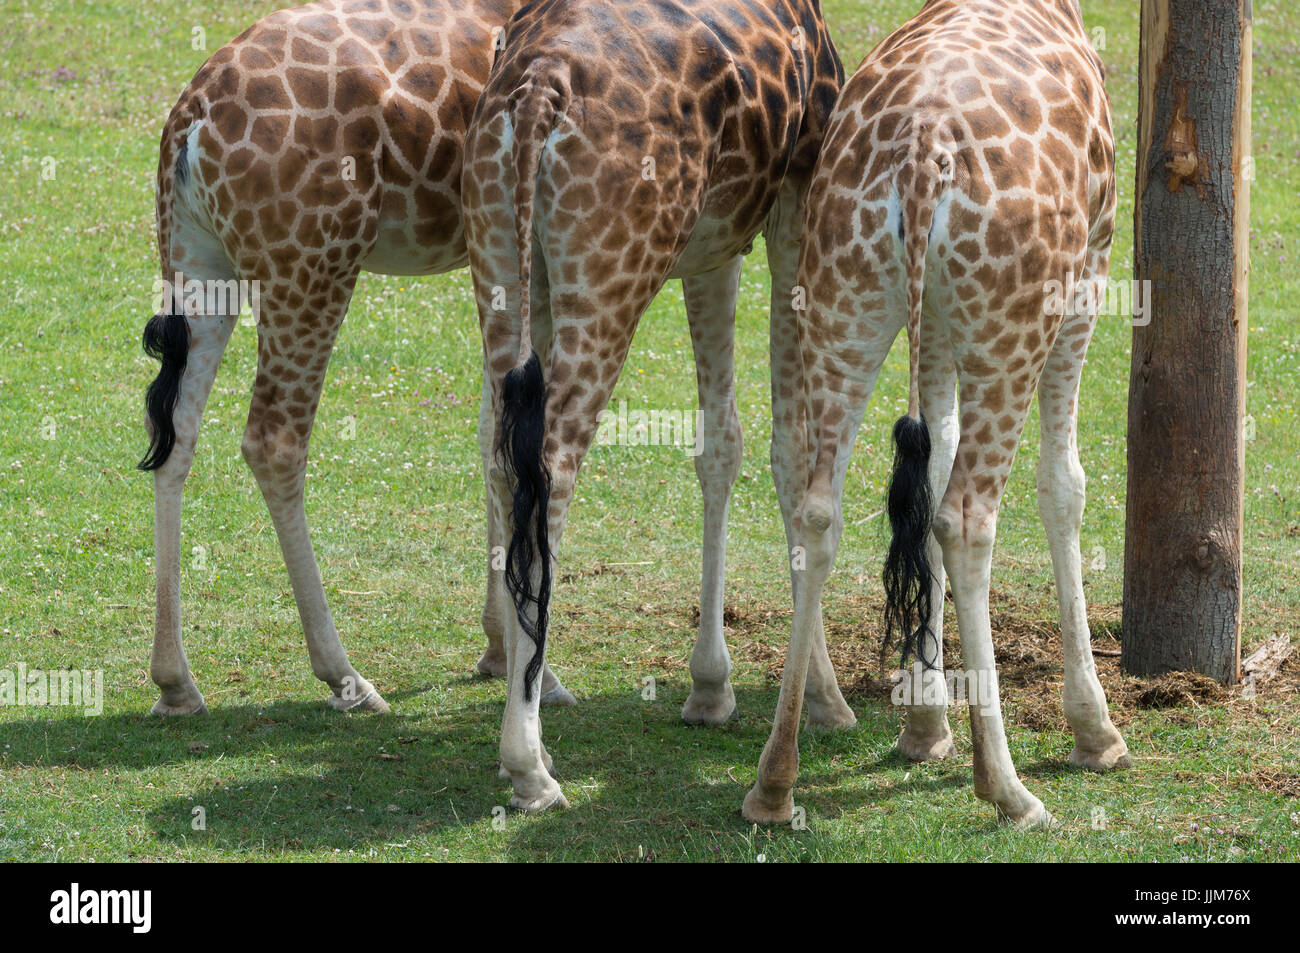 Giraffe in Captivity Stock Photo